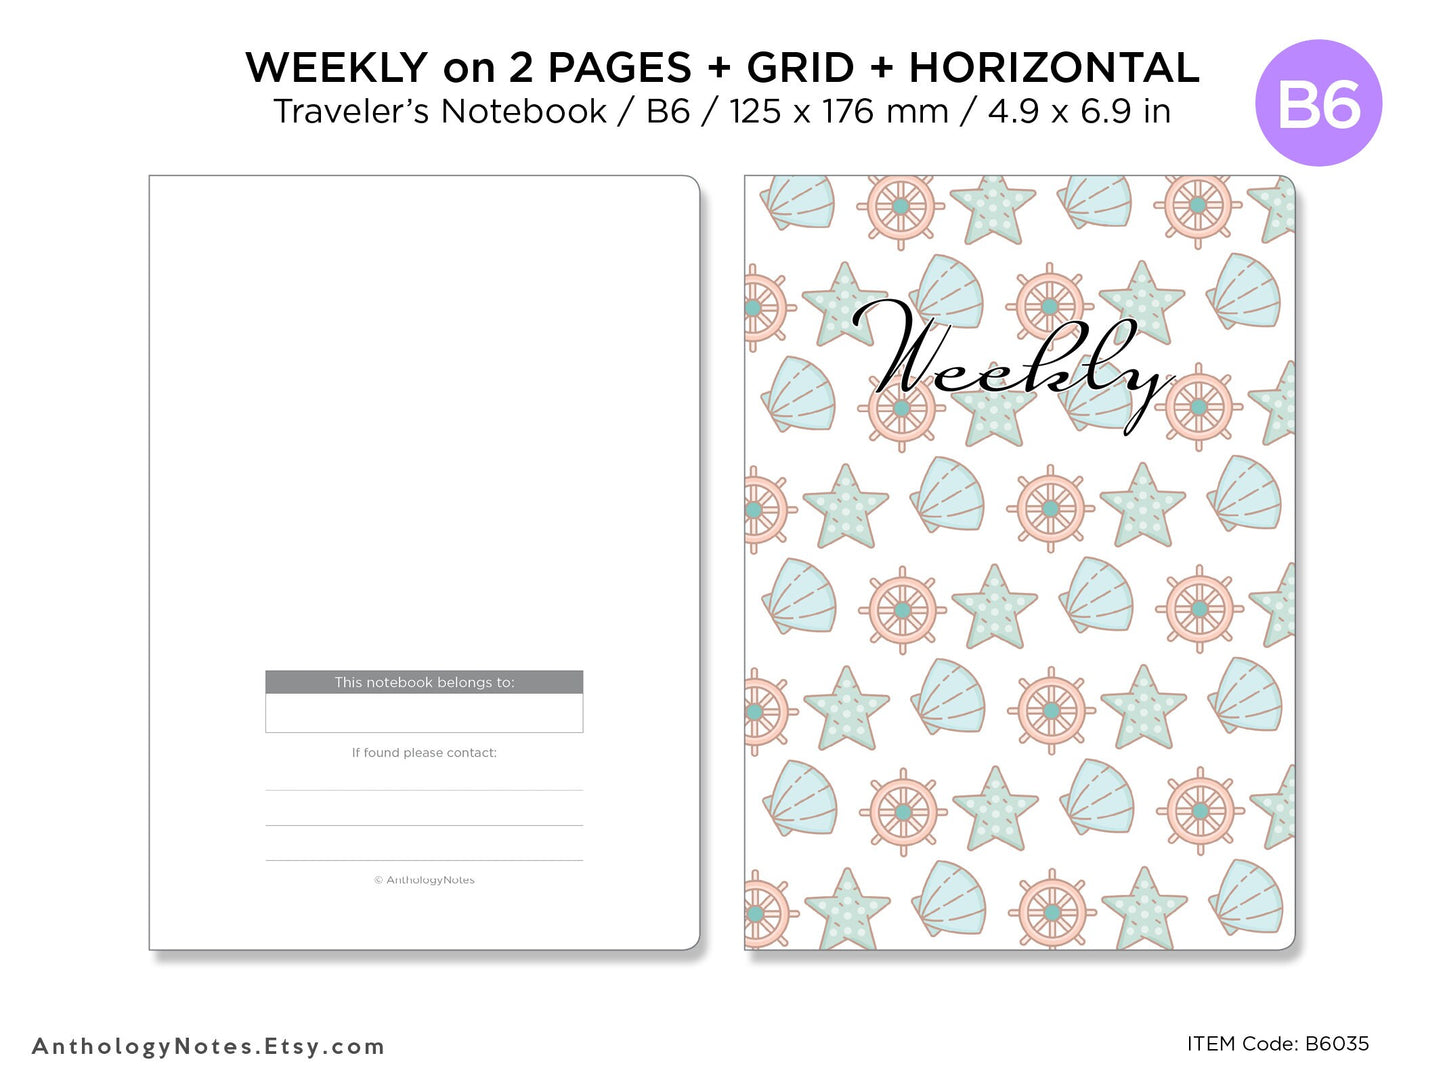 B6 Week View GRID - Horizontal - Weekly Tracker - 24 Hour Tracker - Traveler's Notebook Printable Insert B6035